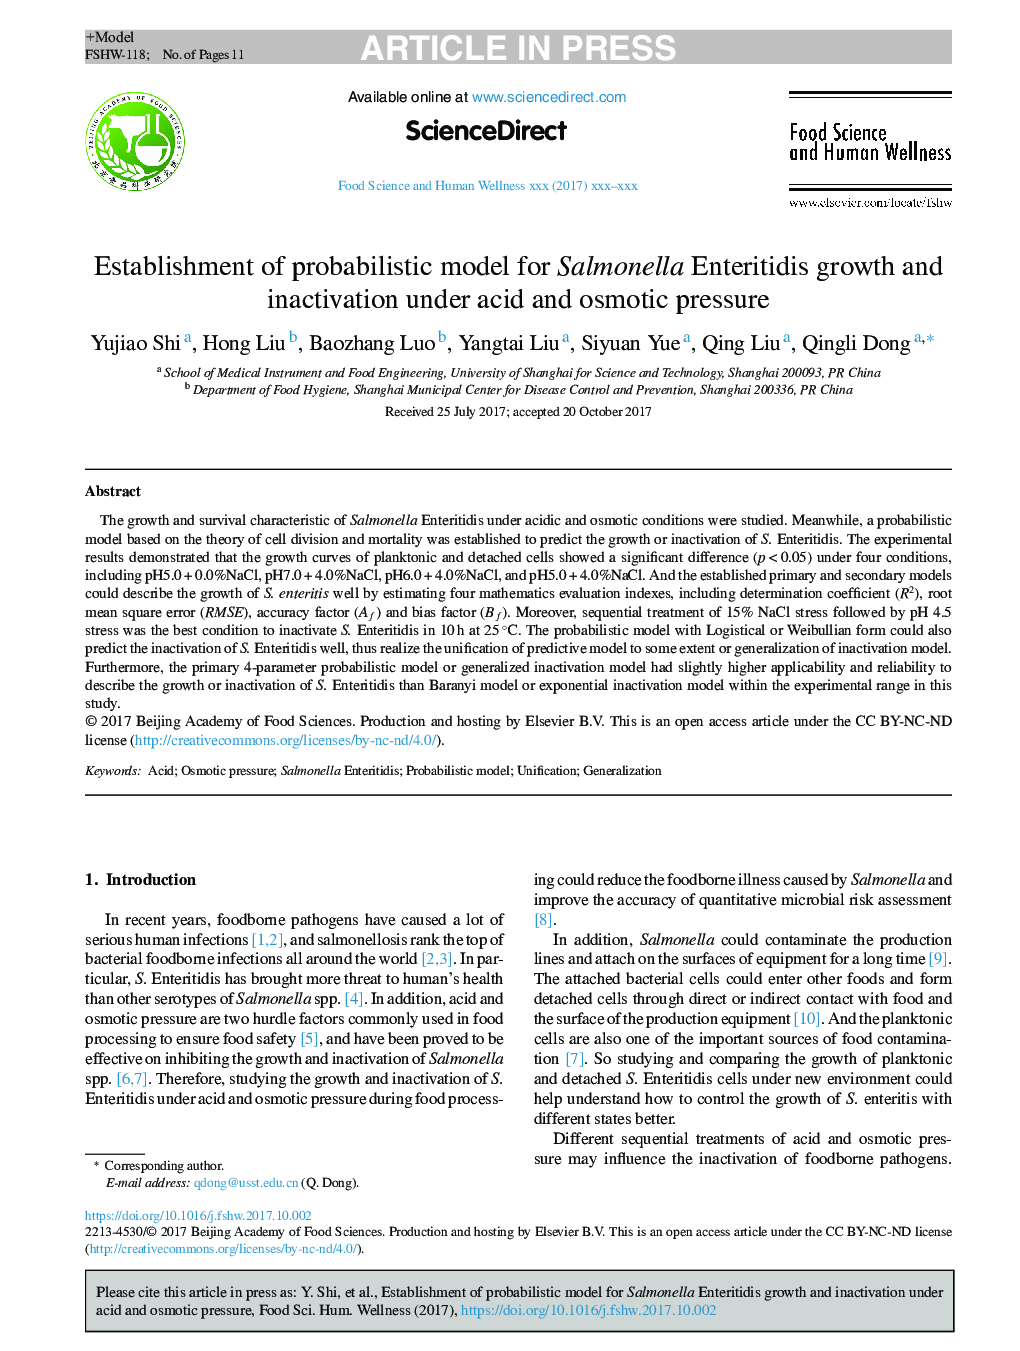 Establishment of probabilistic model for Salmonella Enteritidis growth and inactivation under acid and osmotic pressure